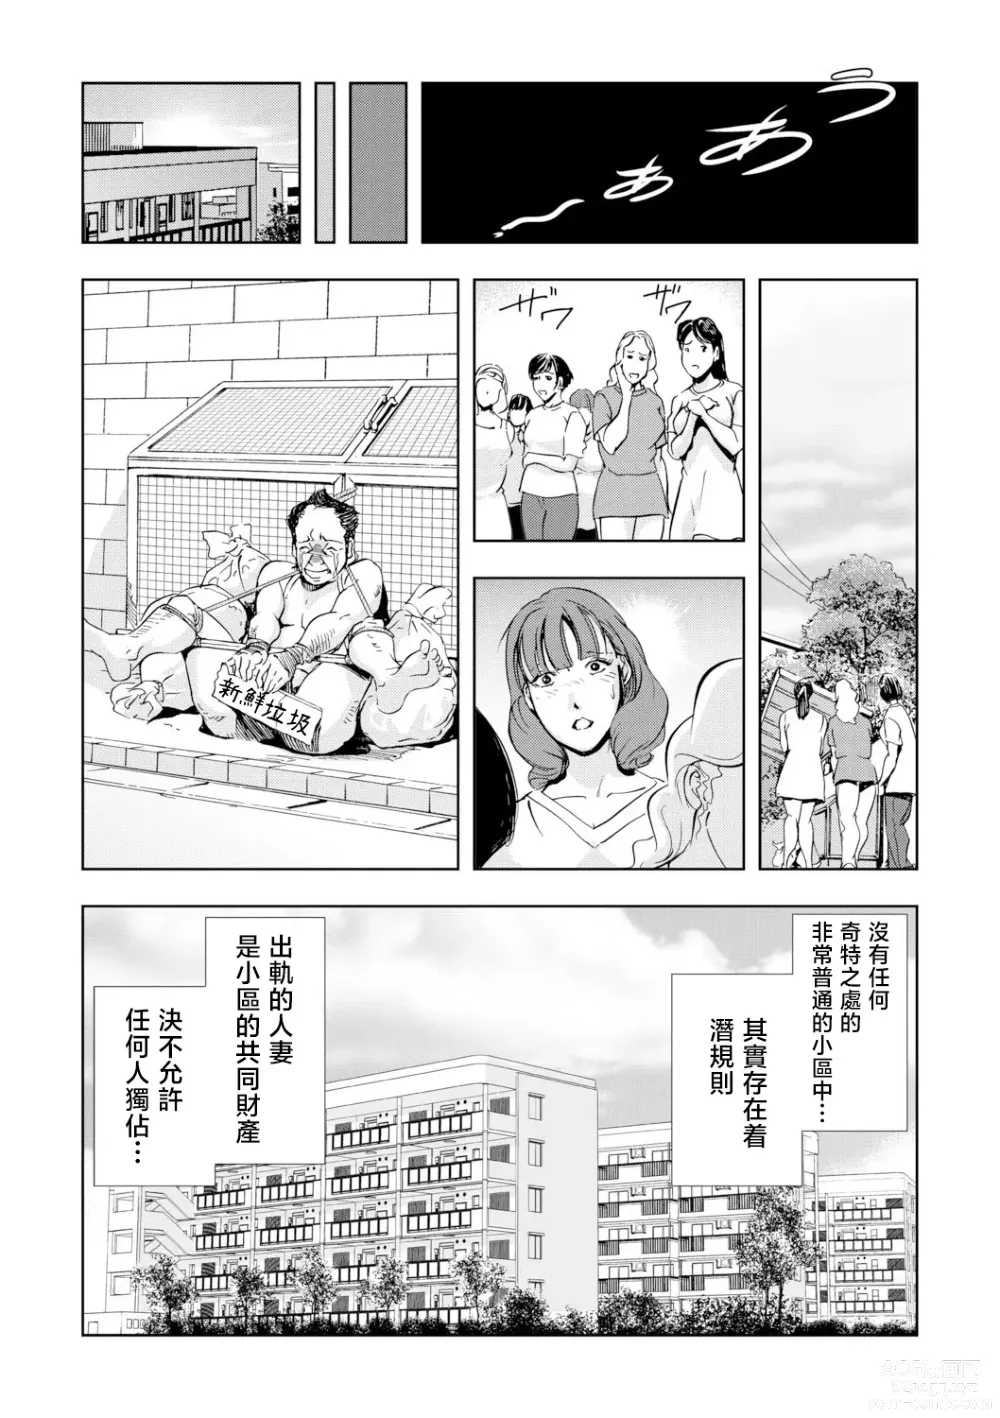 Page 29 of manga Netorare Vol.03